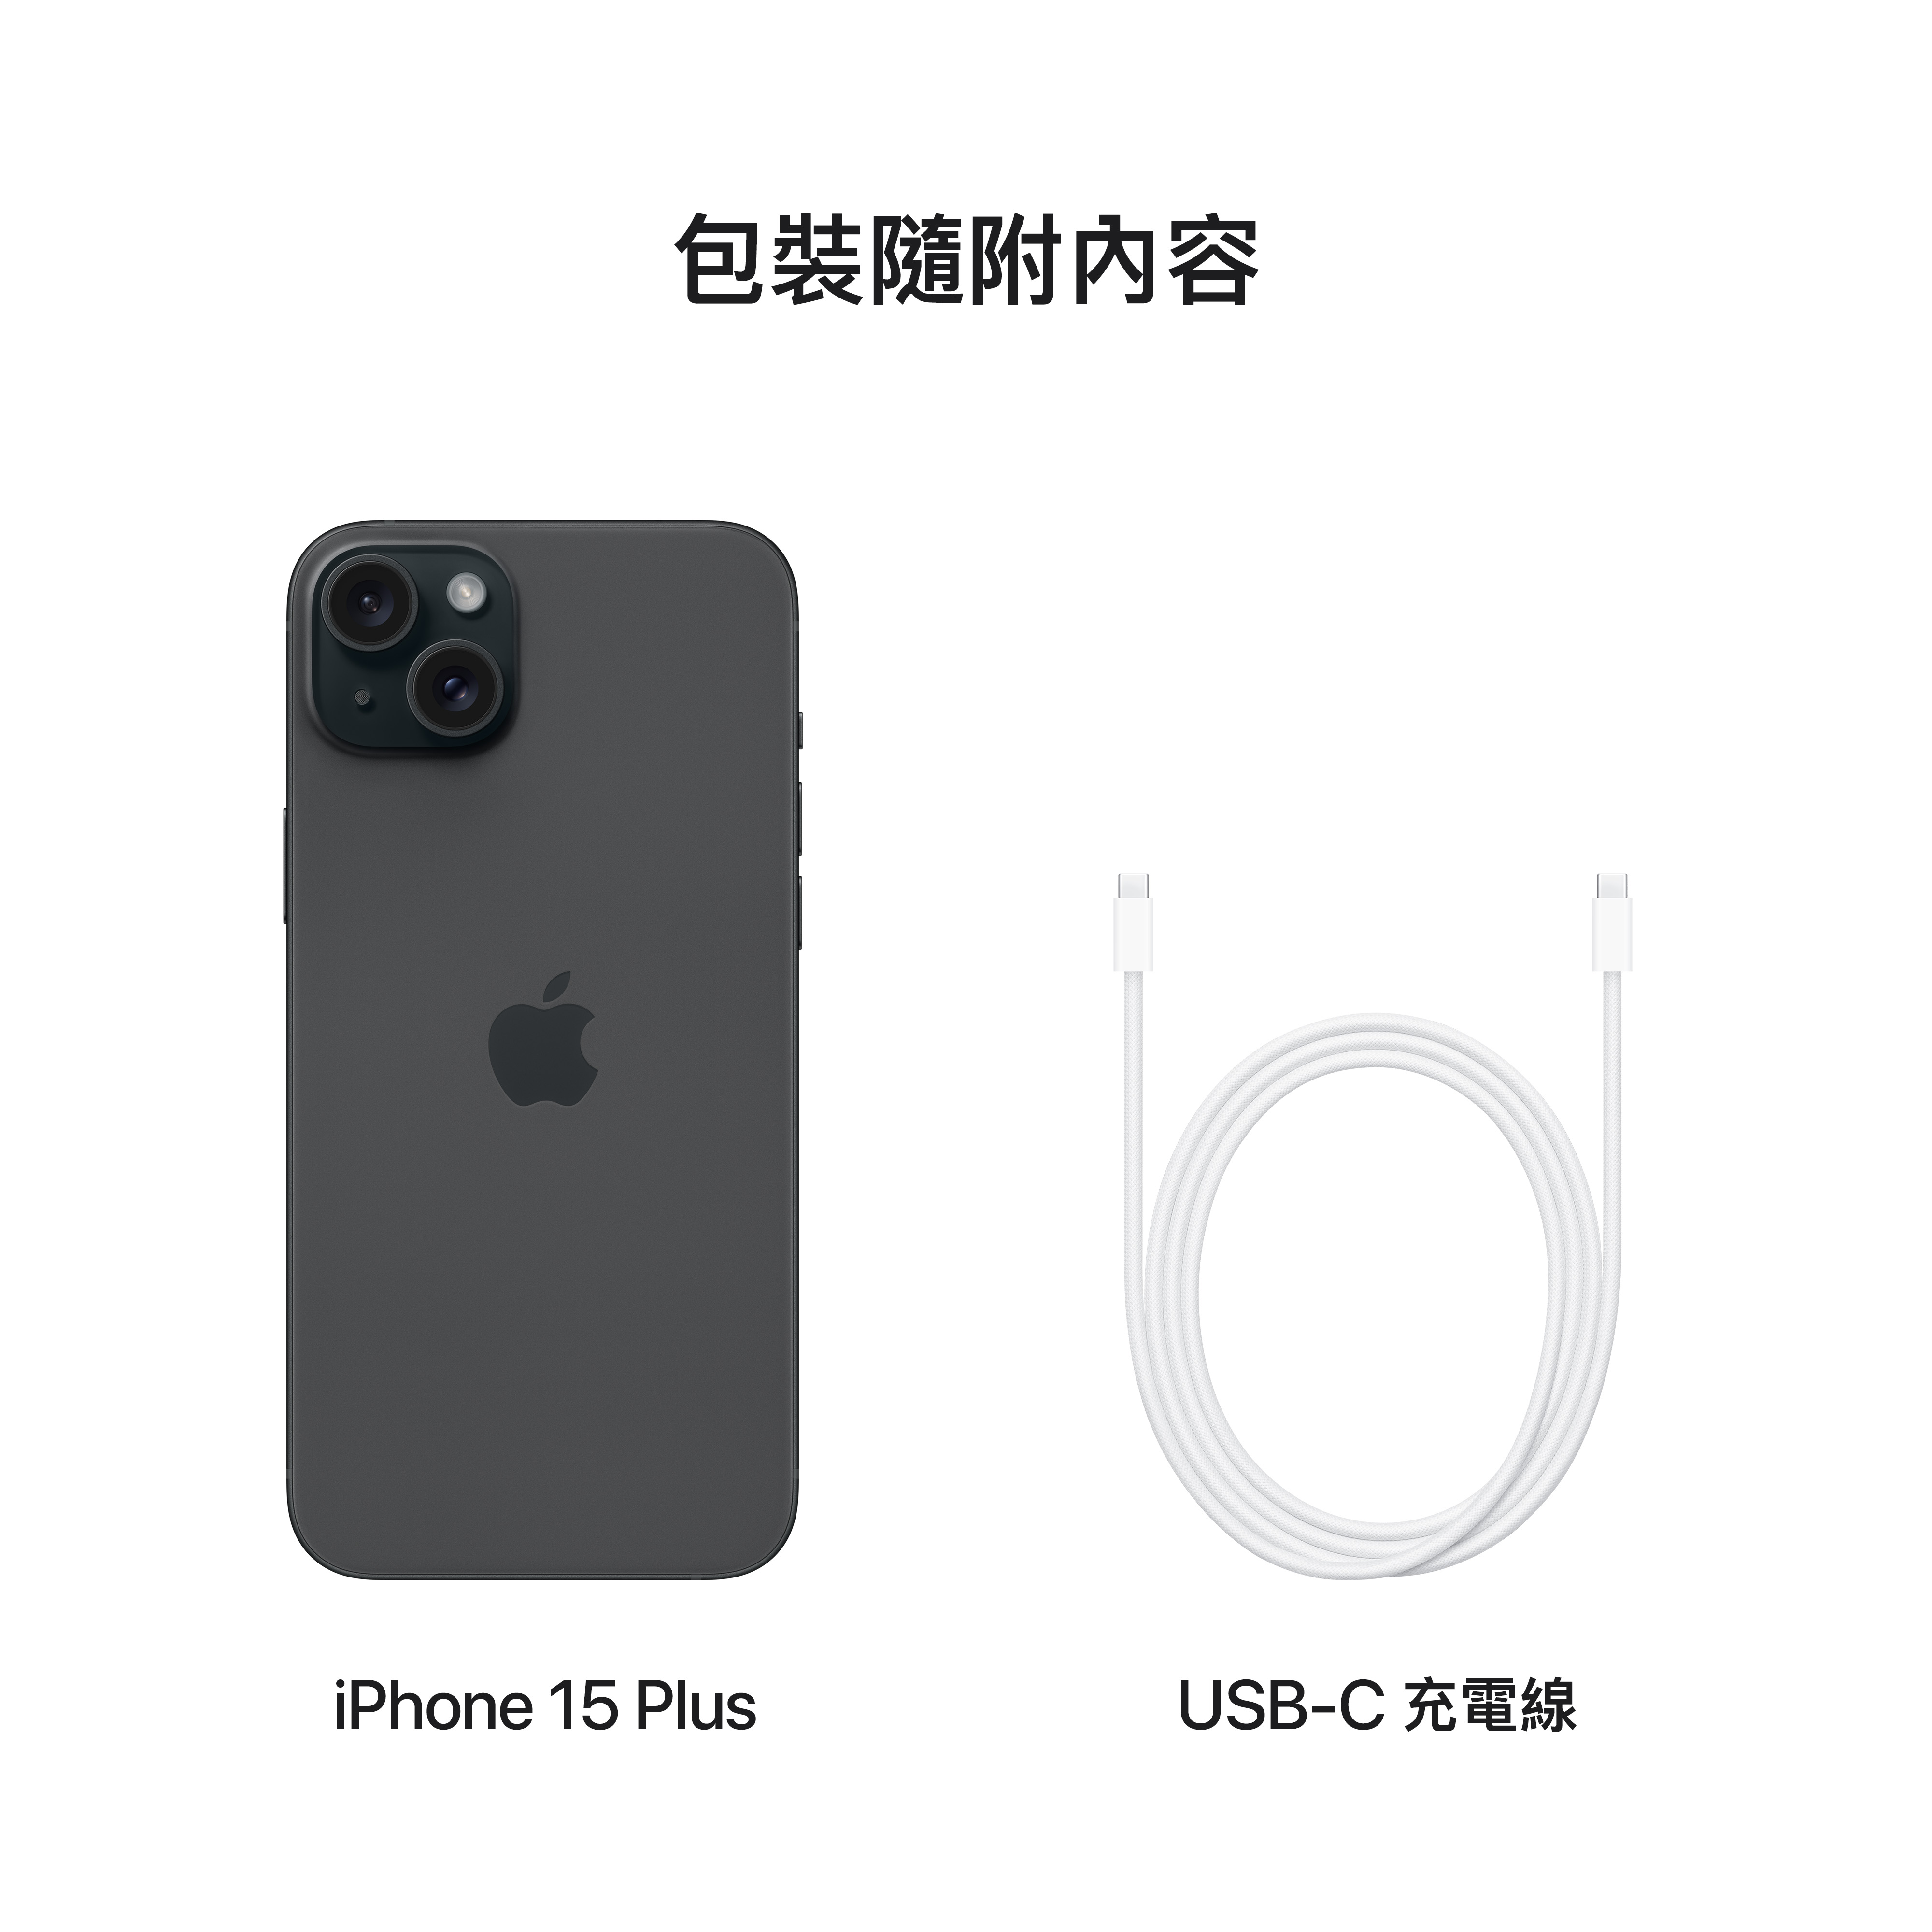 iPhone 15 Plus 128GB 黑色, 黑色, large image number 6